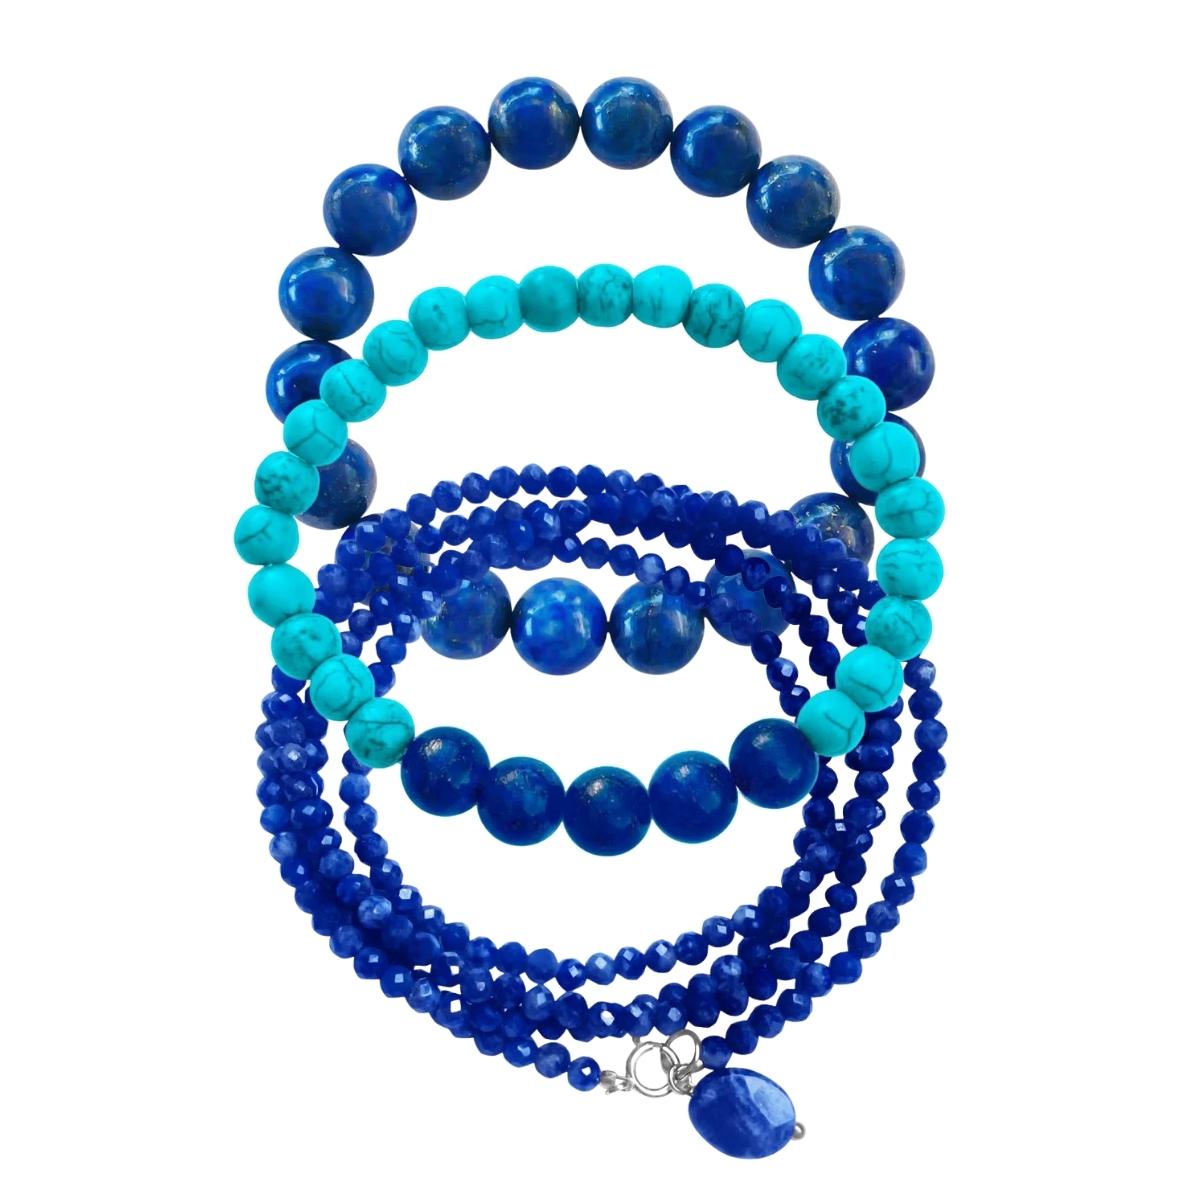 Wear the Libra Zodiac Gemstone Bracelet Set to feel the Libra energies!